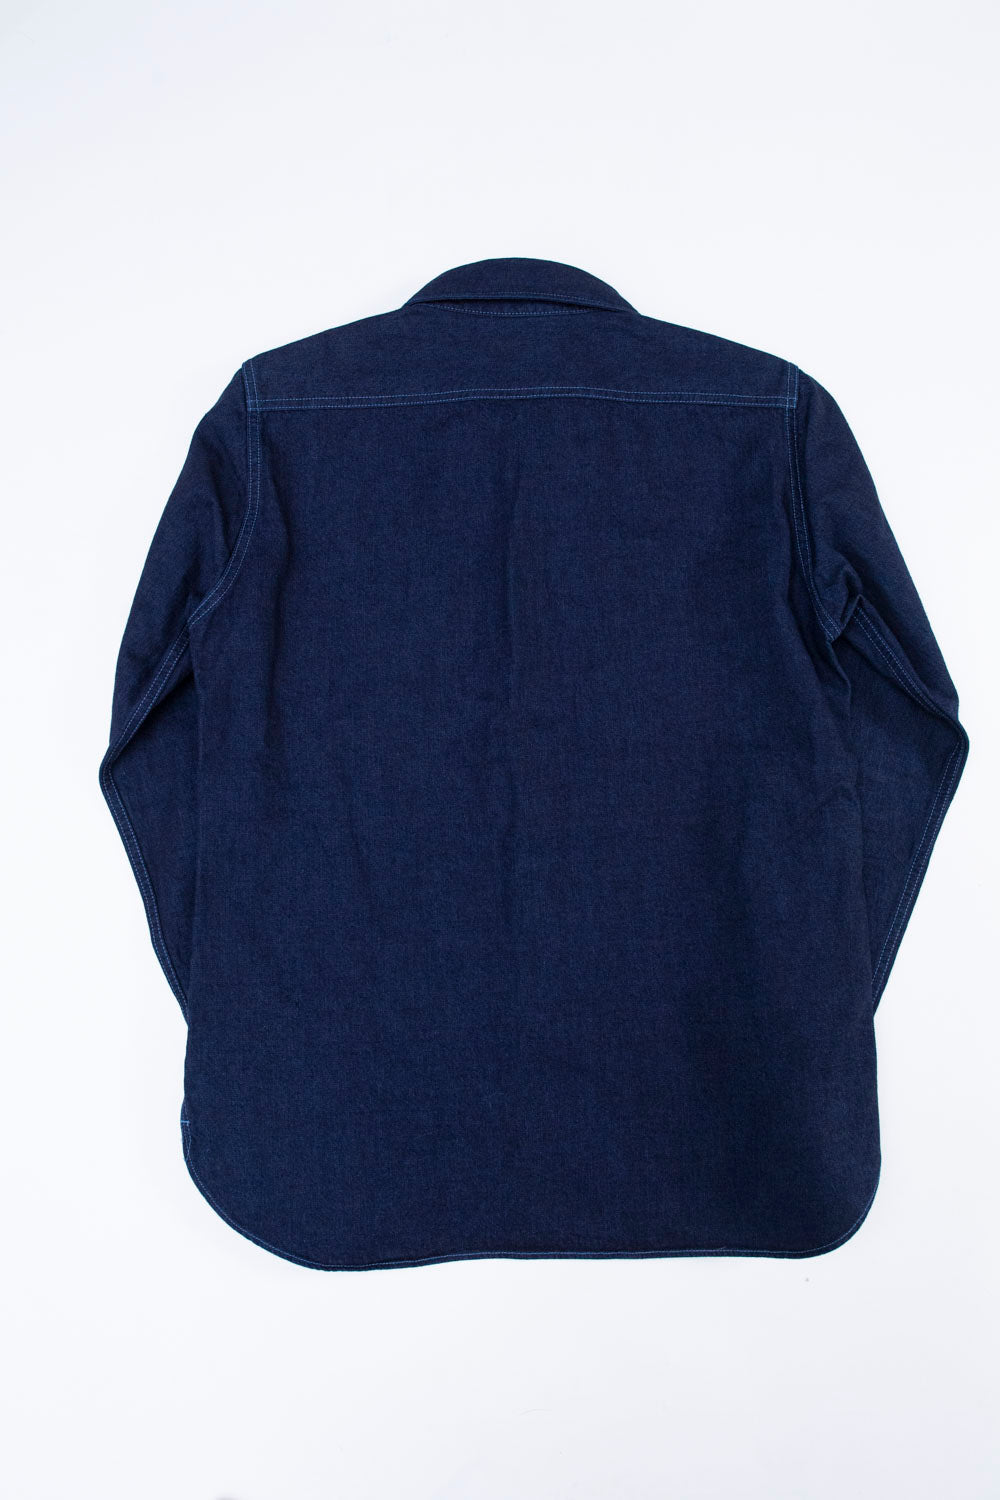 IHSH-353-BLU - 10oz Selvedge Denim Work Shirt - Indigo Overdyed Blue